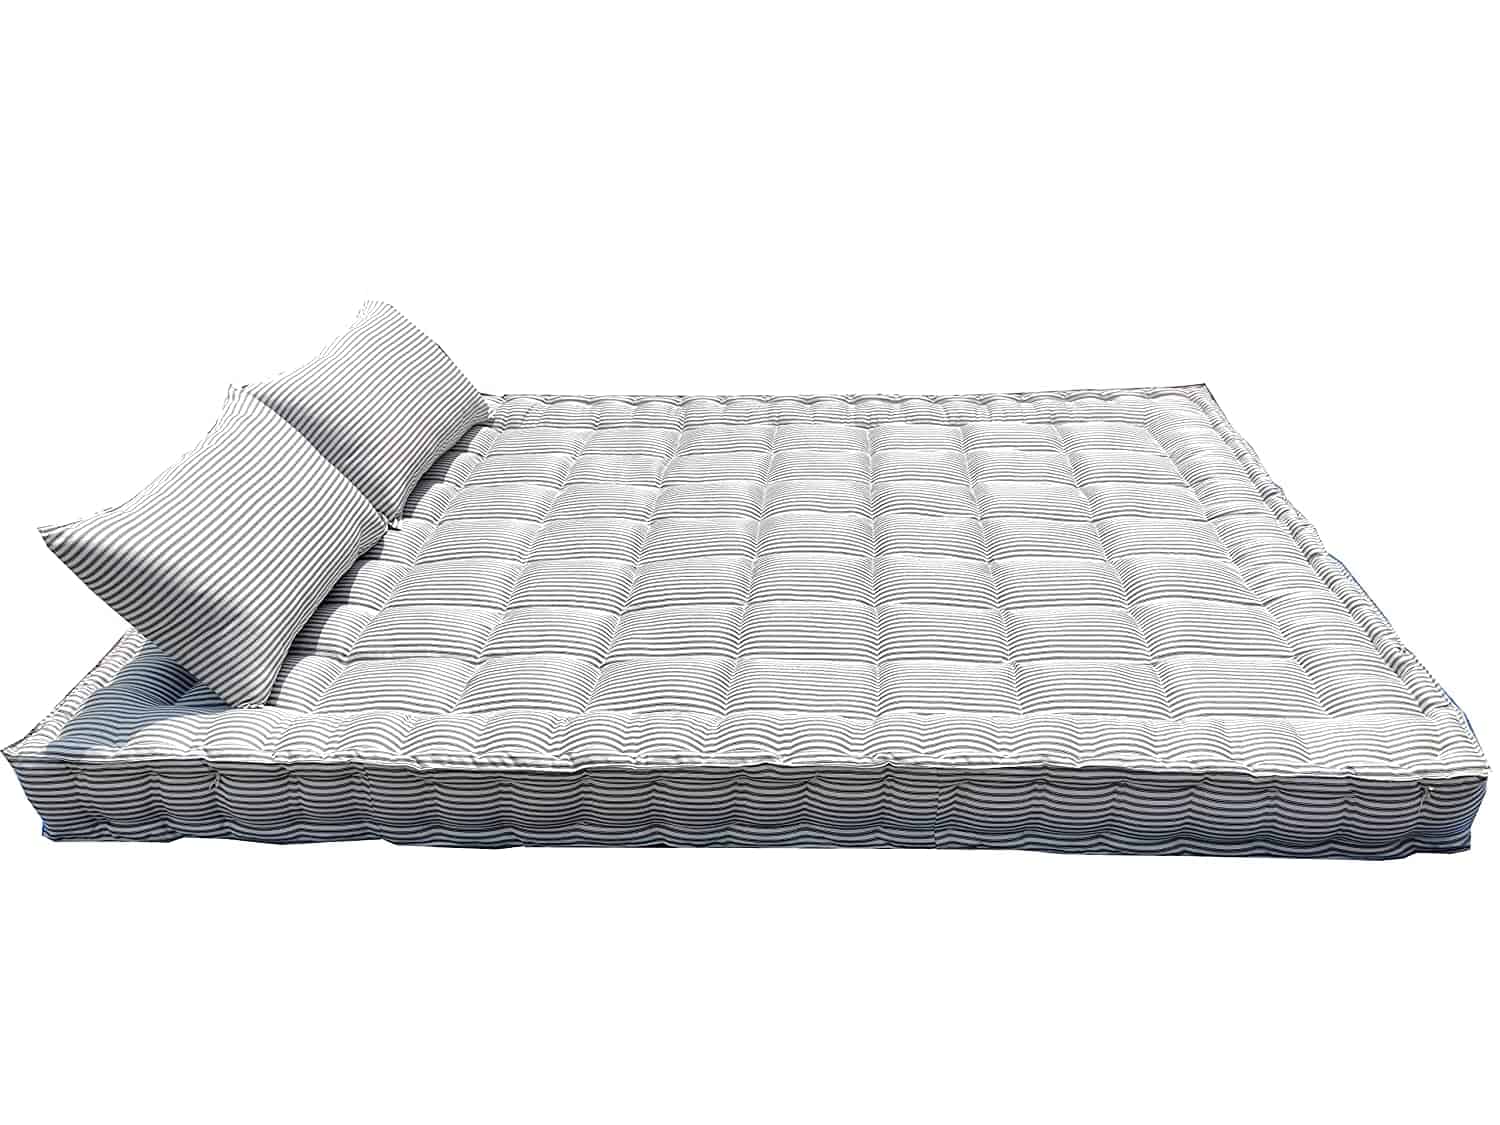 cotton sheets for 8 full mattress